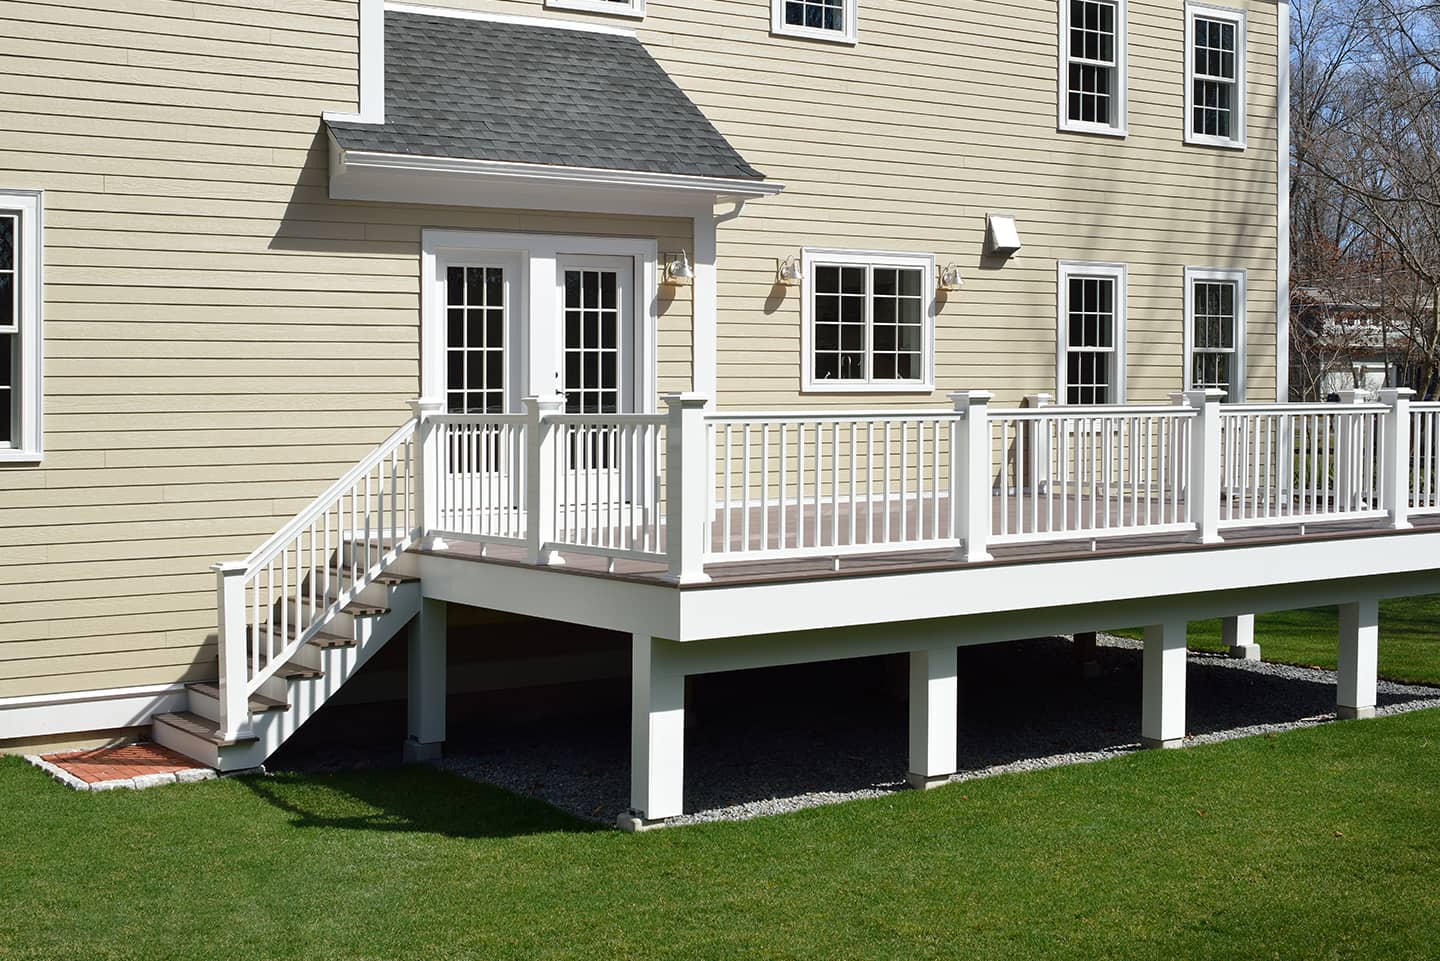 New composite deck white veranda and railing posts